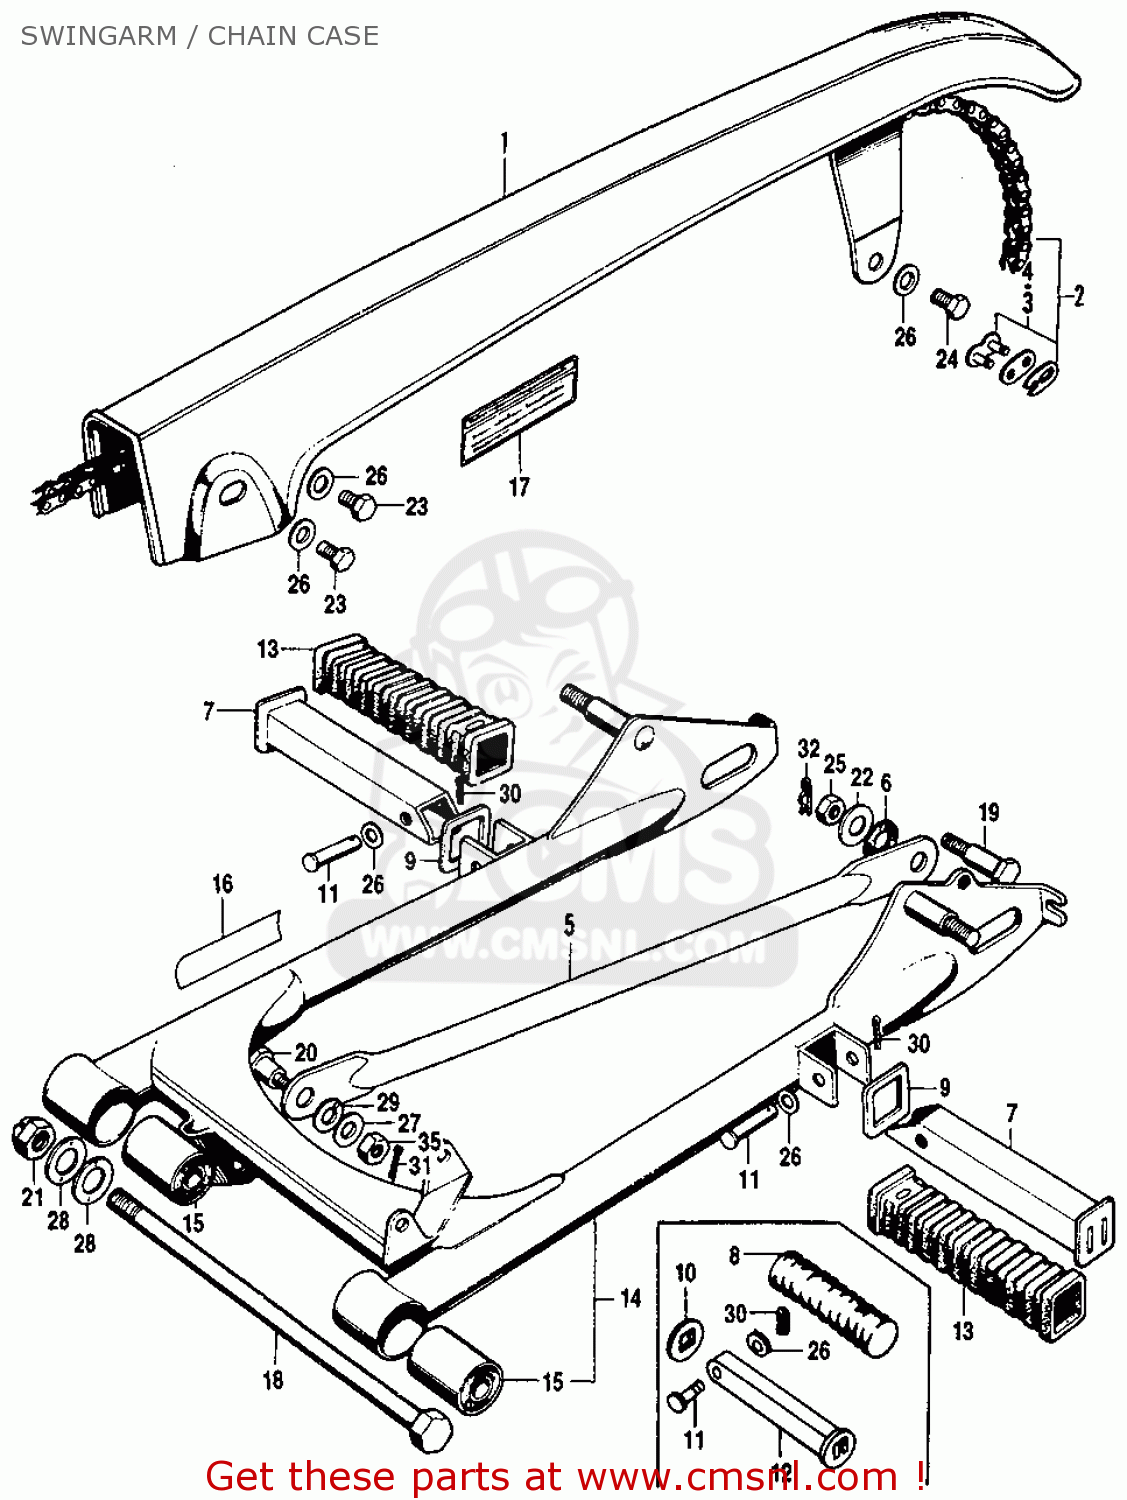 porte ampoule honda cb 125 - Page 3 Honda-cb125s-s1-1974-usa-swingarmchain-case_bighu0213f4116_b0df